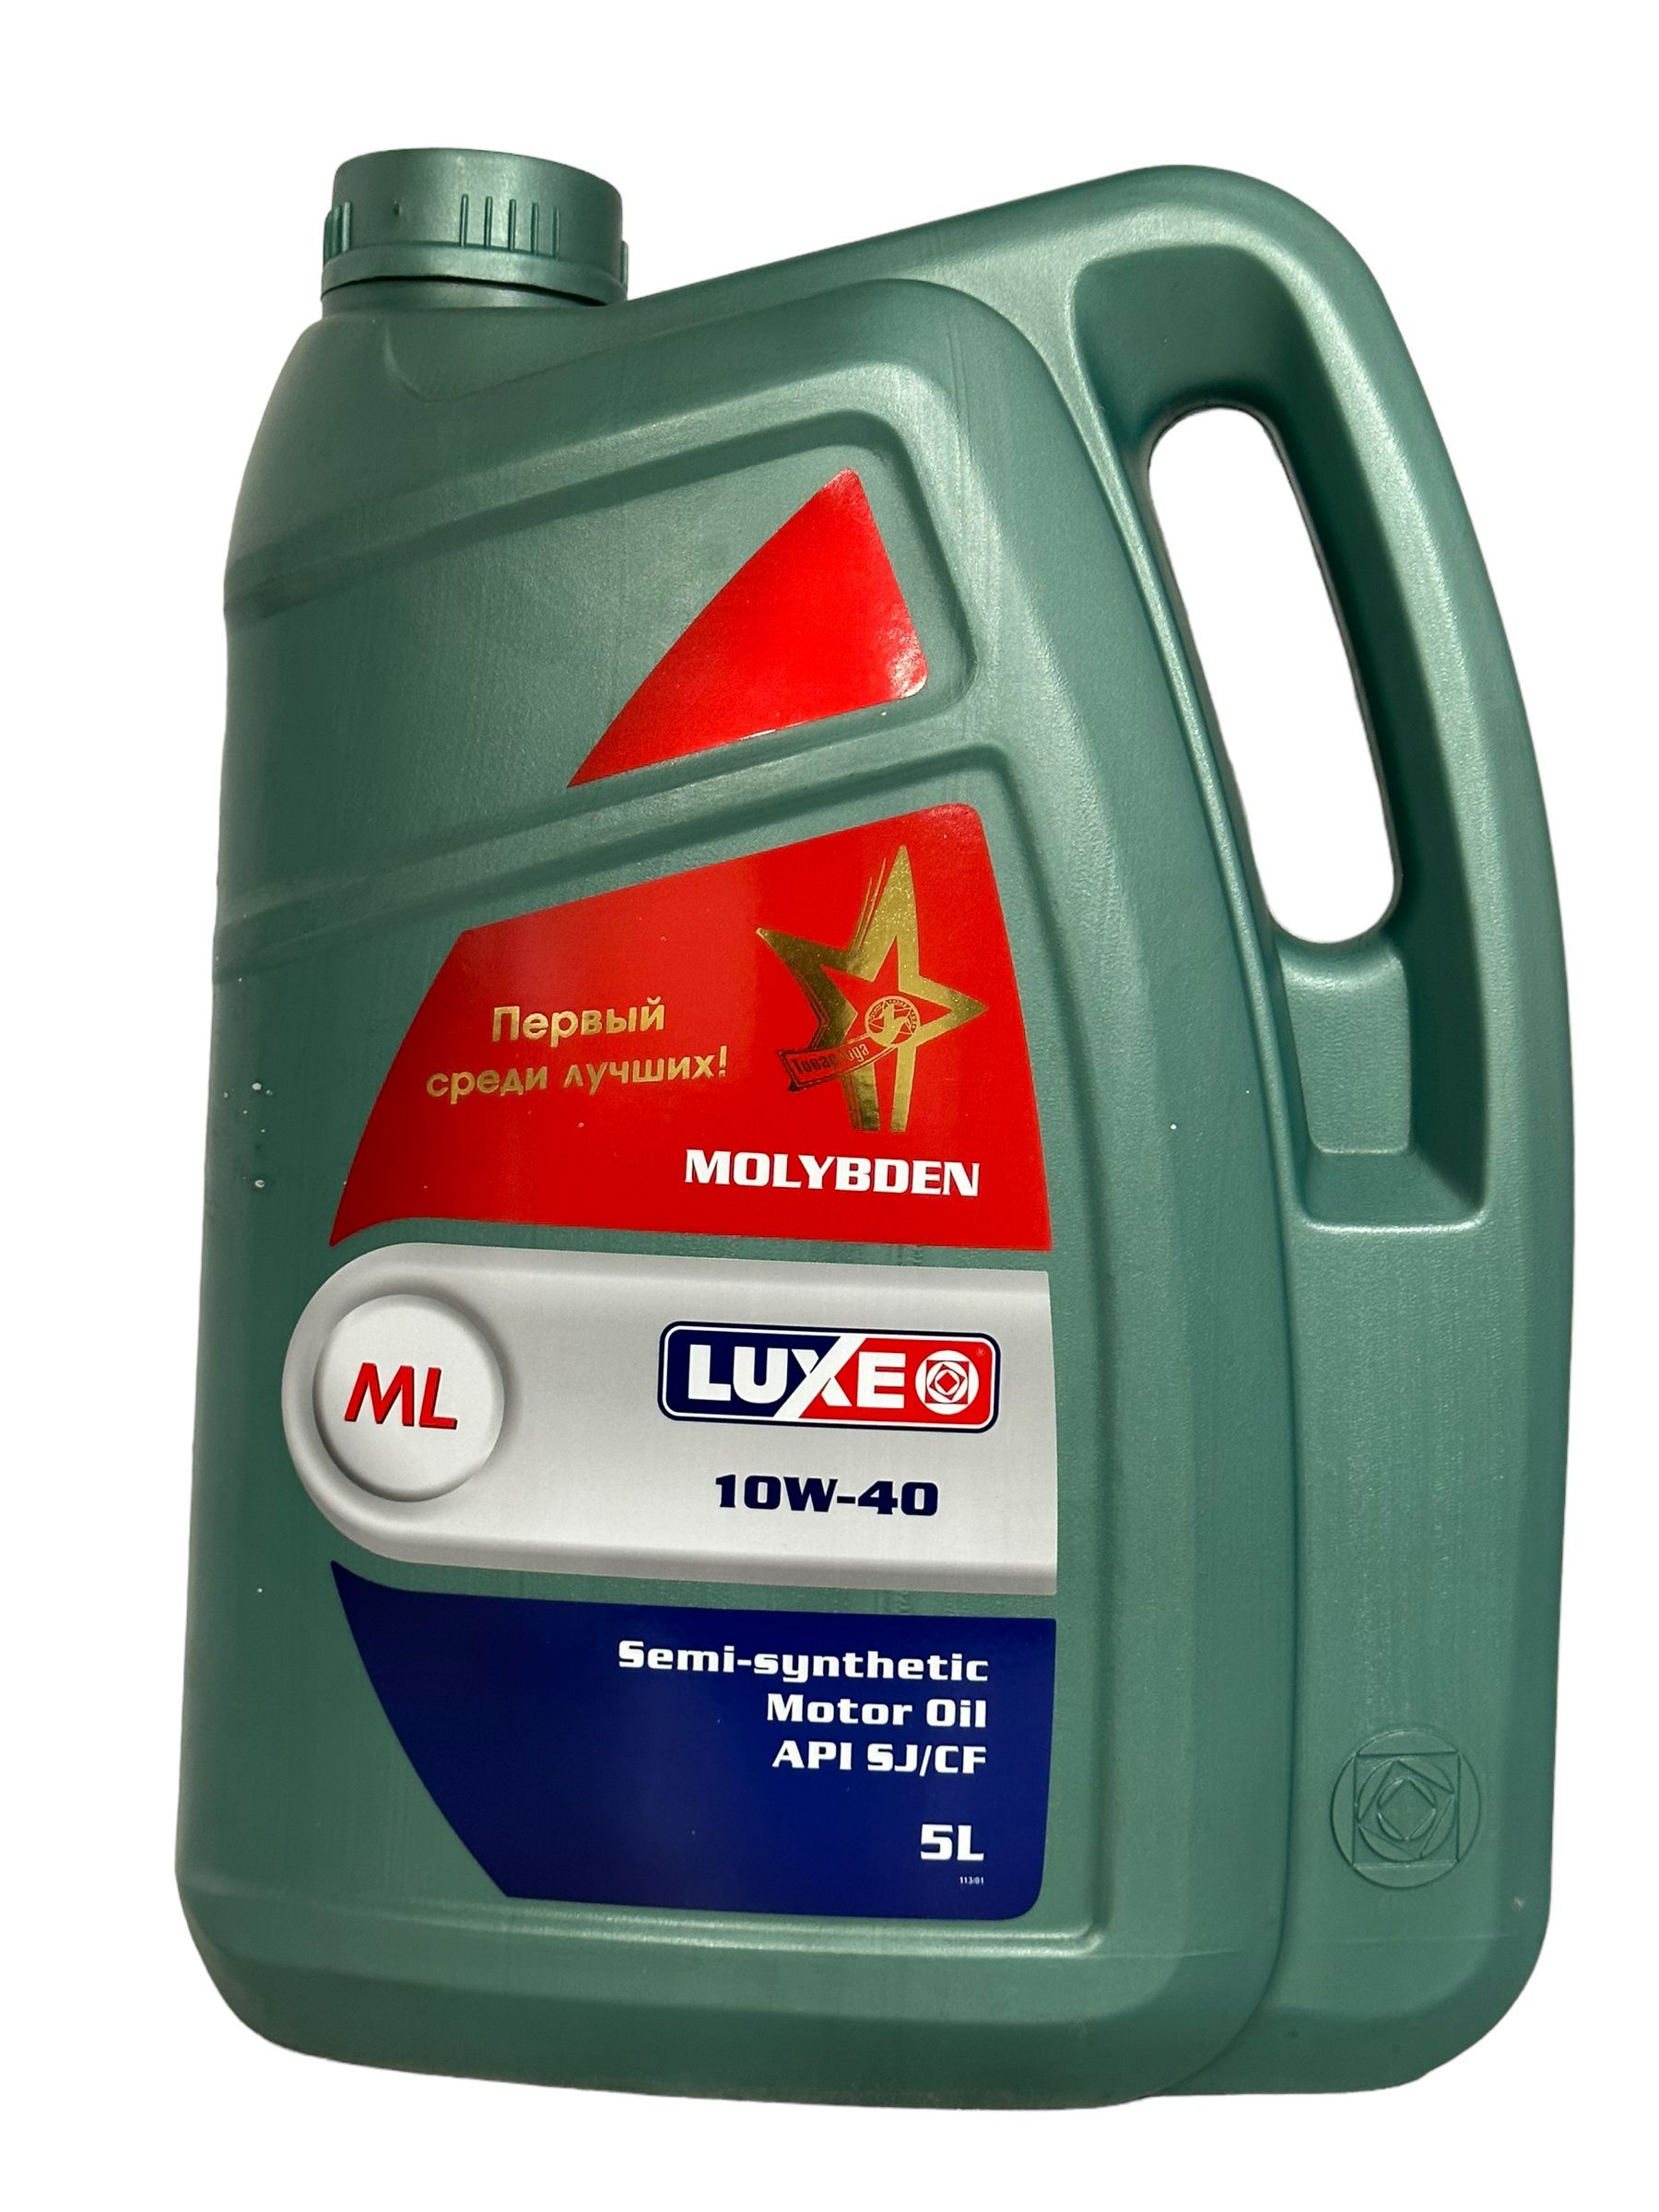 Масло люкс 10w40. Luxe масло моторное молибден (Molybden).